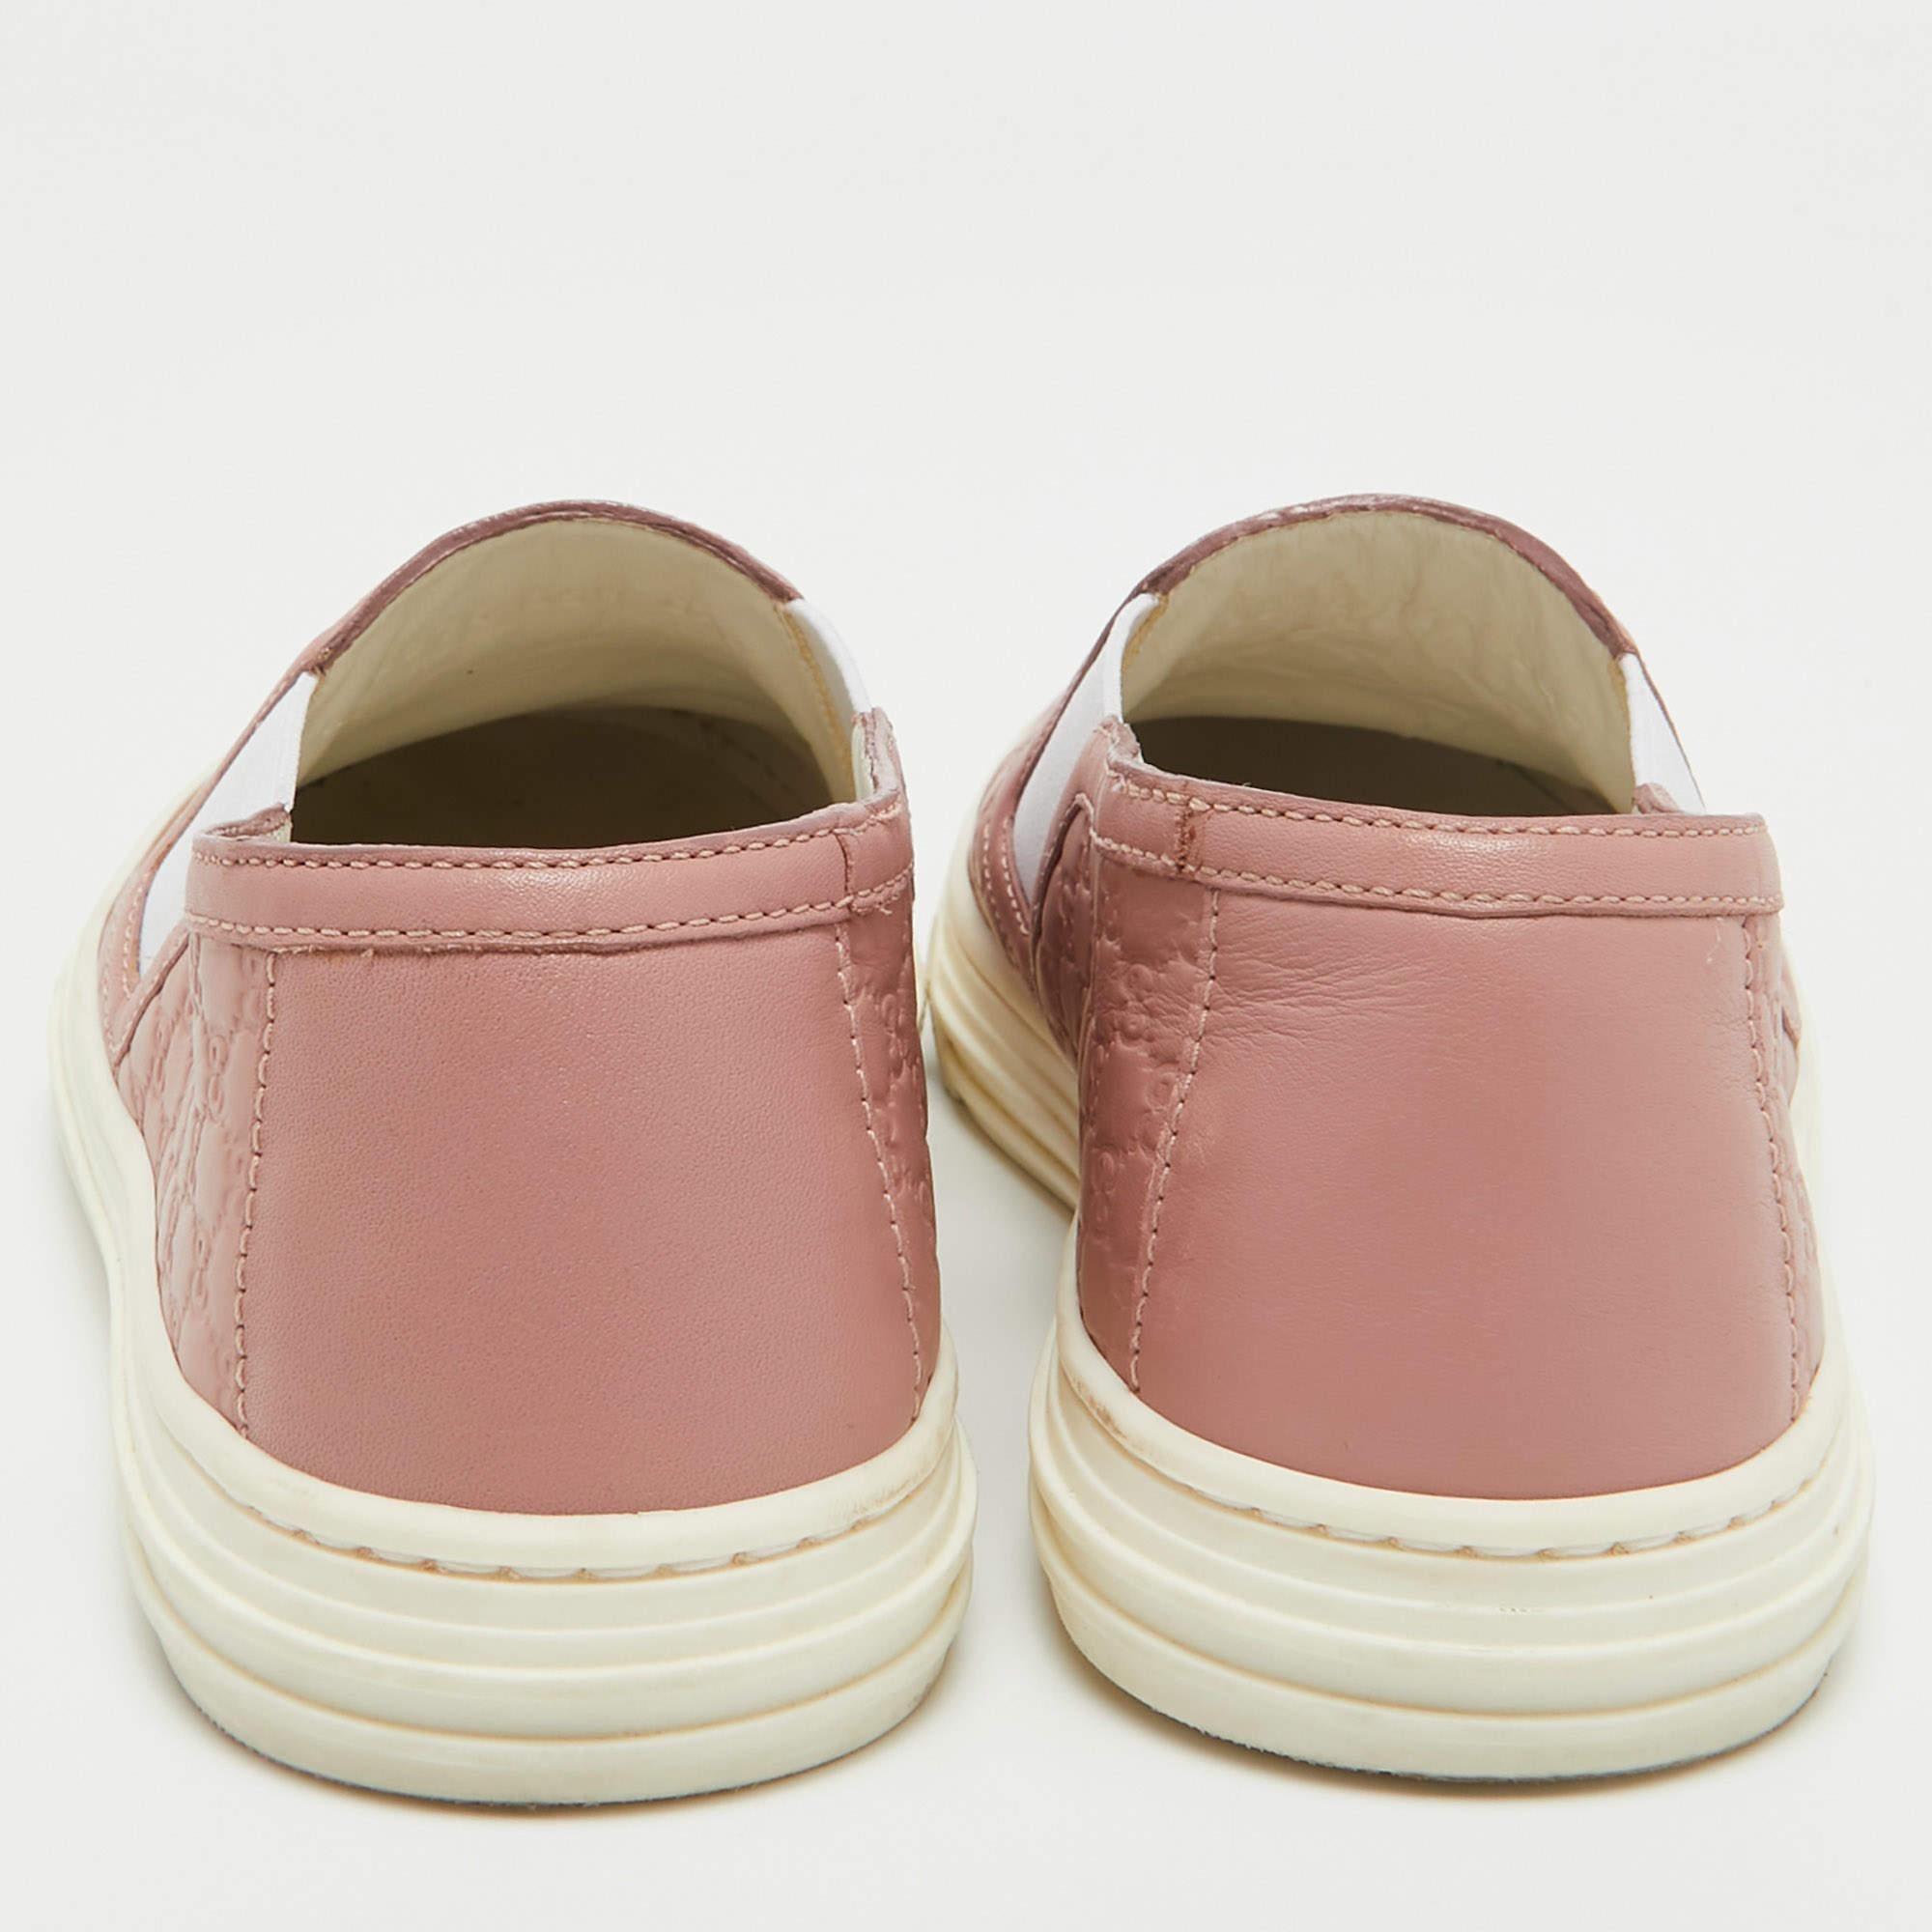 Gucci Pink Microguccissima Leather Slip On Sneakers Size 35.5 In Good Condition For Sale In Dubai, Al Qouz 2